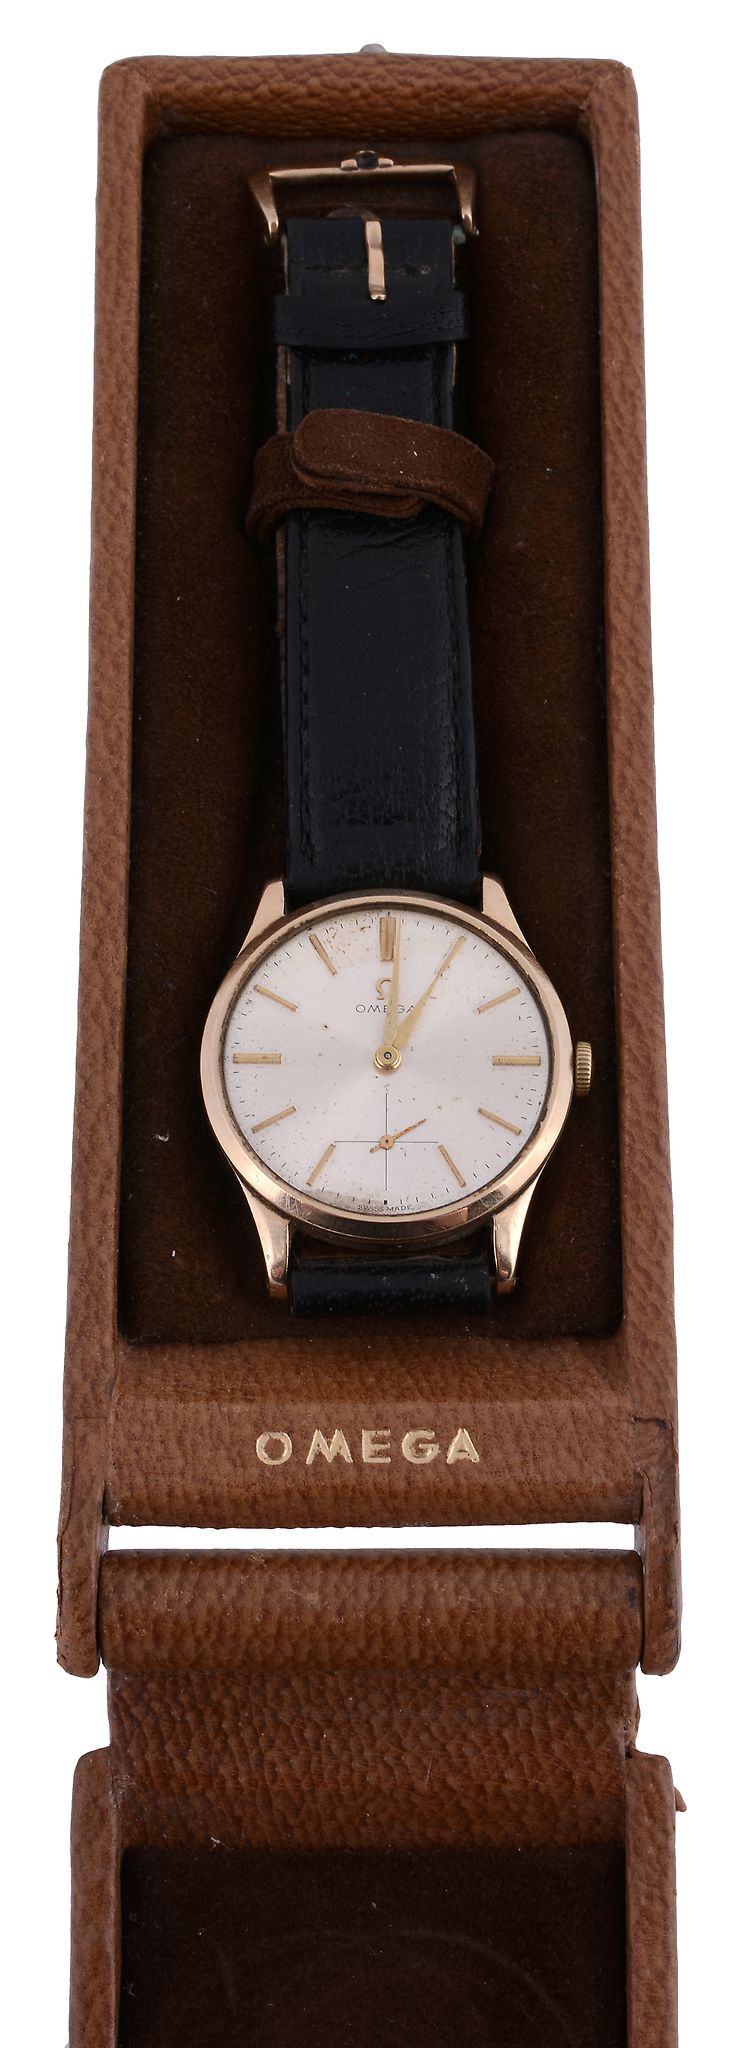 Omega, ref. 13322, a 9 carat gold wristwatch, no. 2441541, hallmarked Birmingham 1949, manual wind - Image 2 of 2